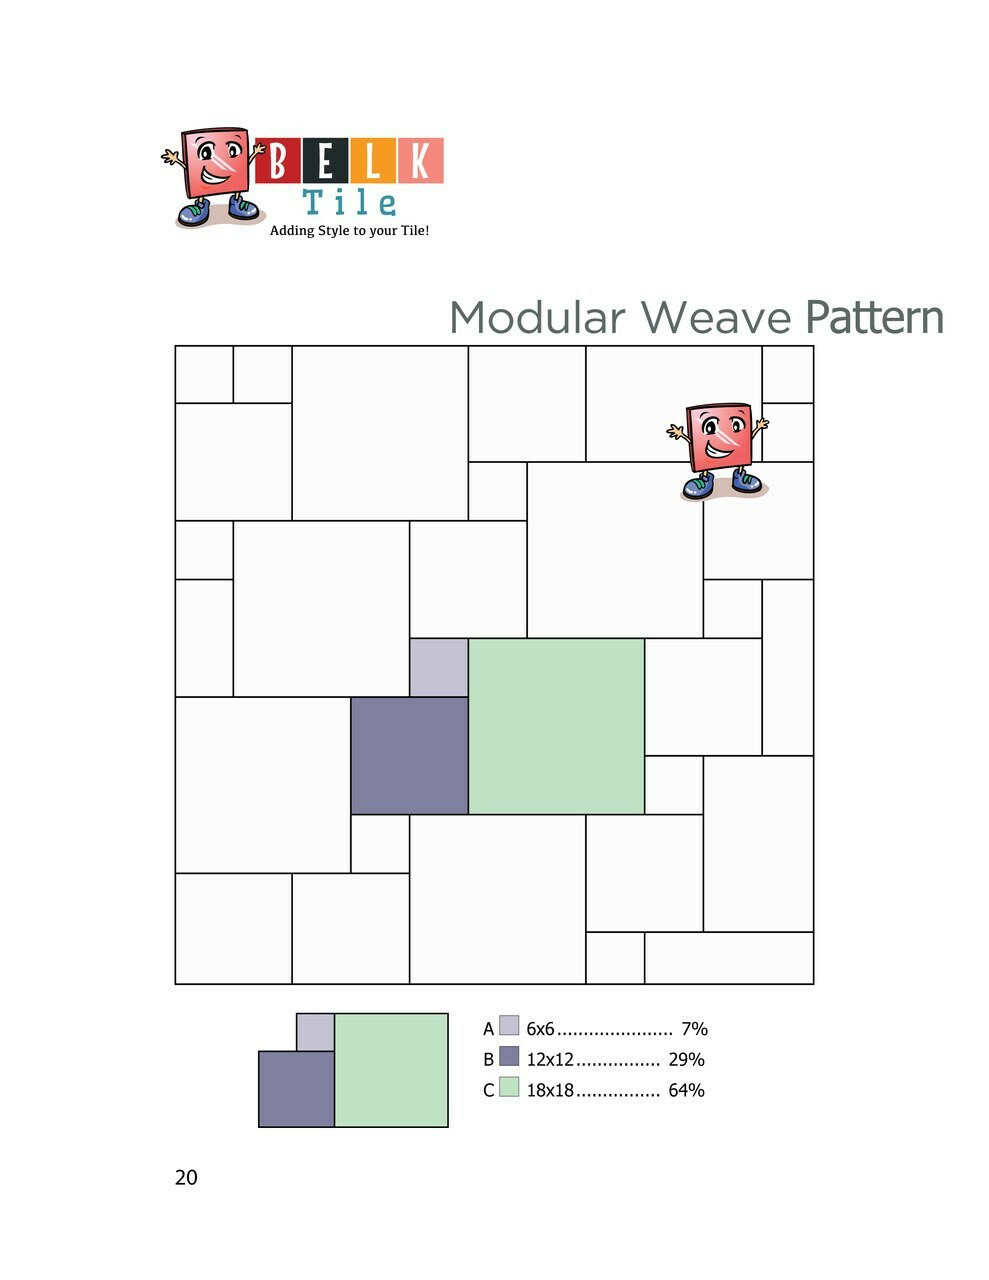 belk-tile-patterns-modular-weave-floor-tile-pattern.jpg